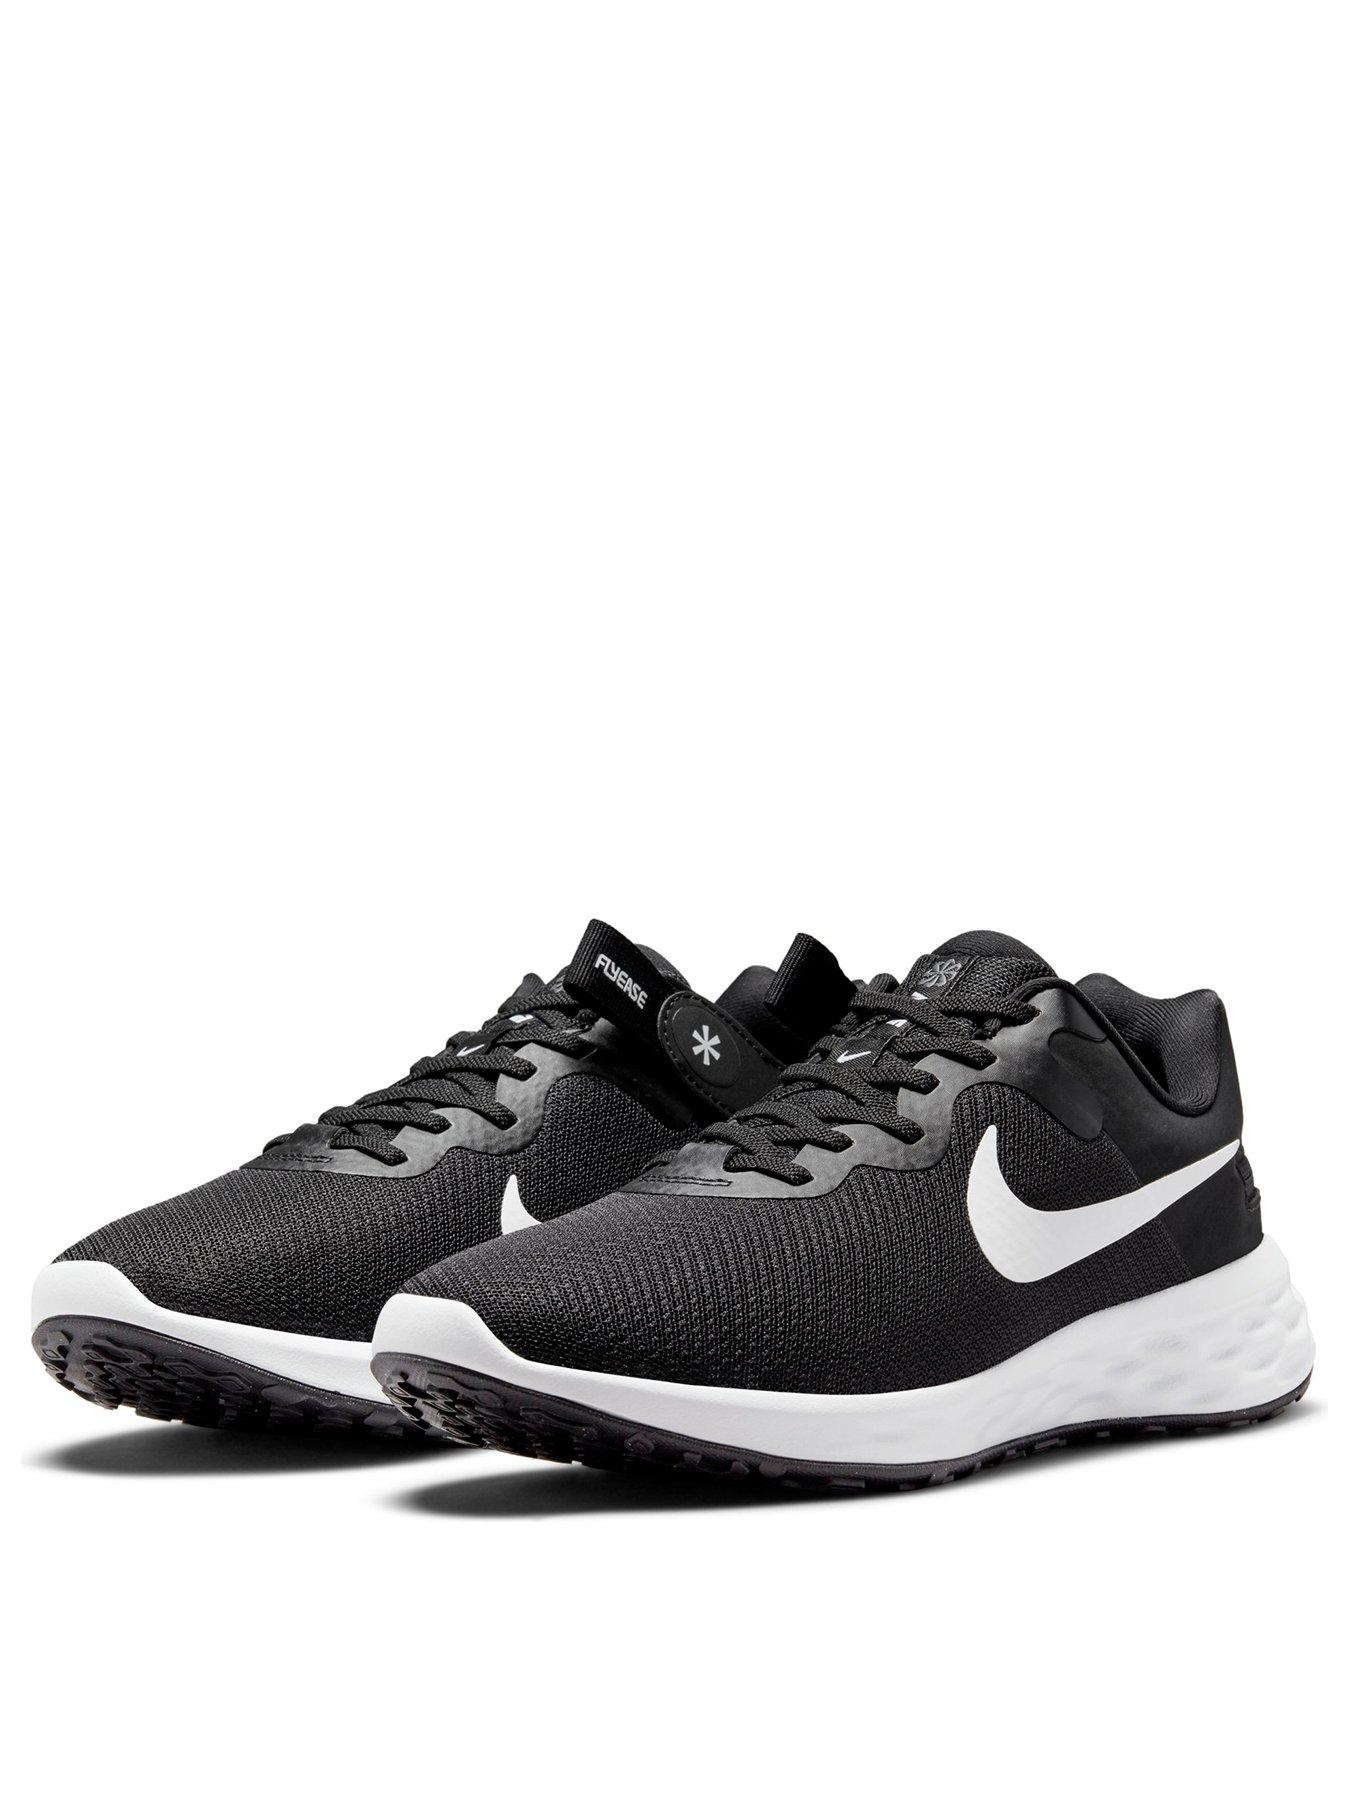 6 | Black | L | Nike Revolution | Nike | Trainers | Men | www.very.co.uk